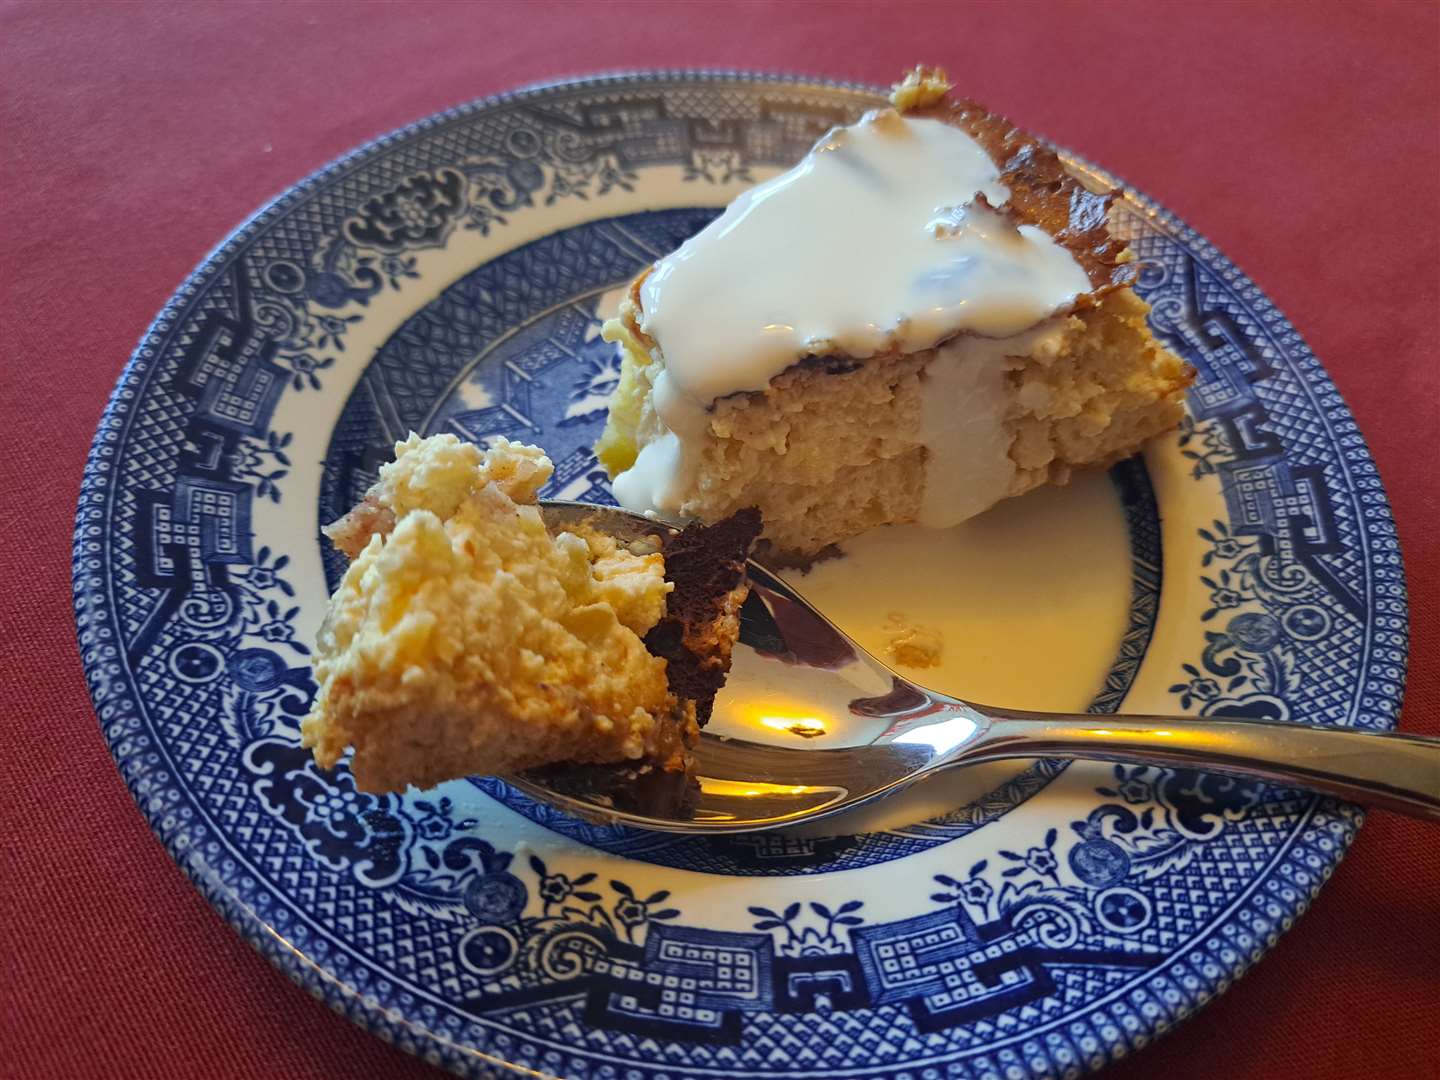 Mango cheesecake with cream